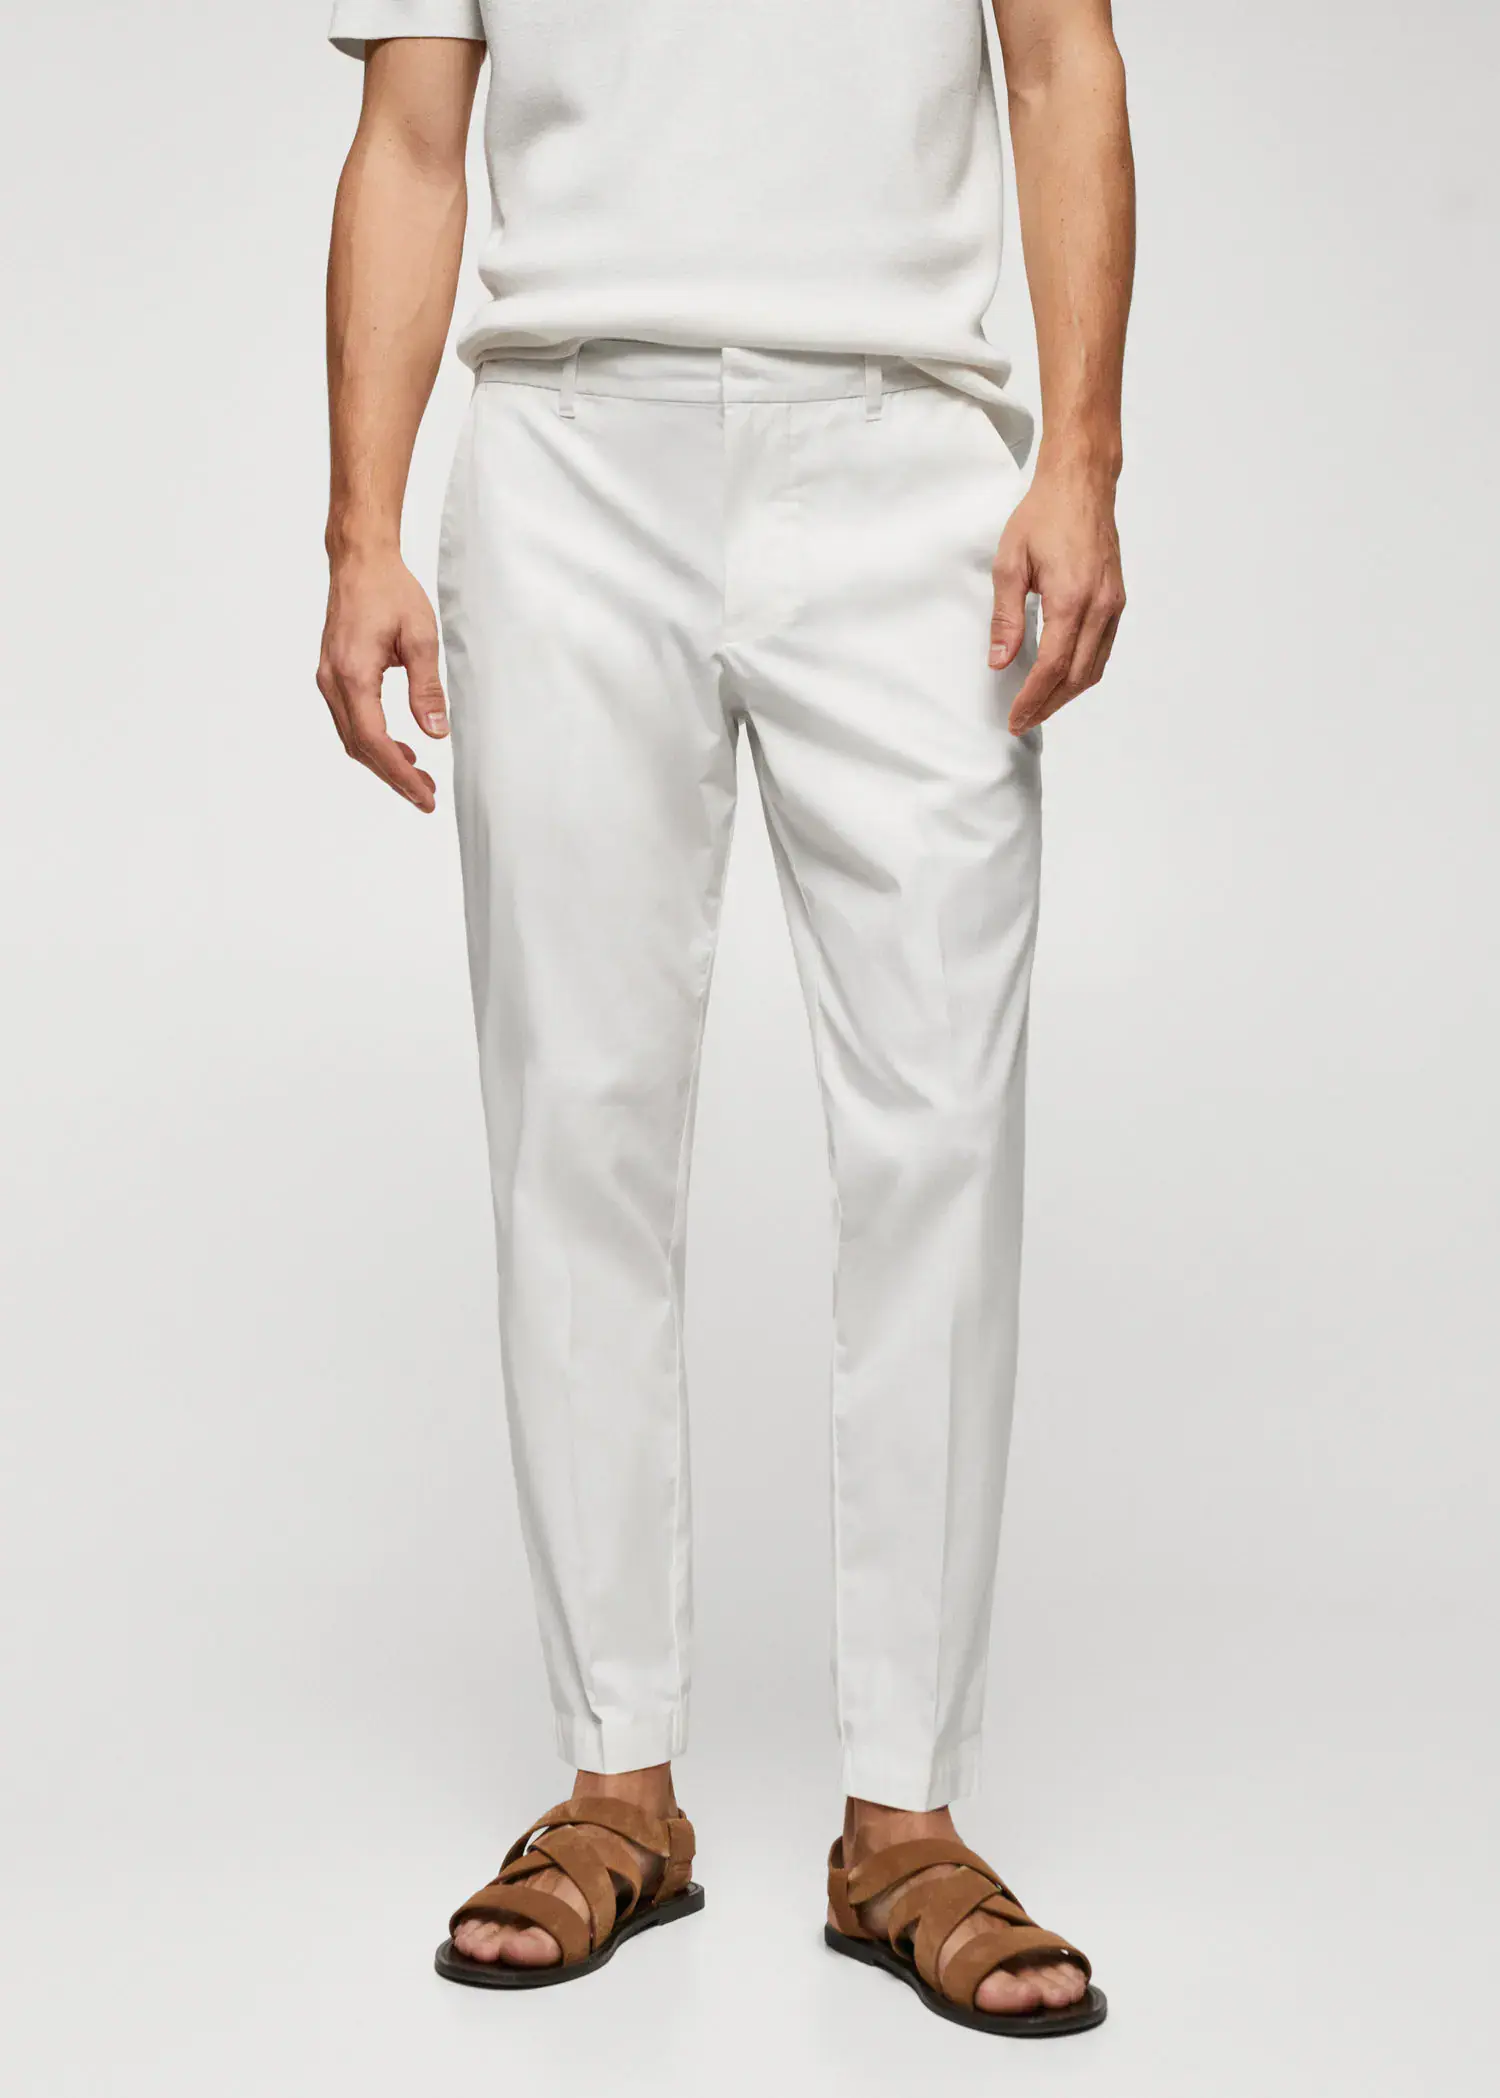 Mango Slim-fit cotton pants. a man wearing white pants and a white shirt. 